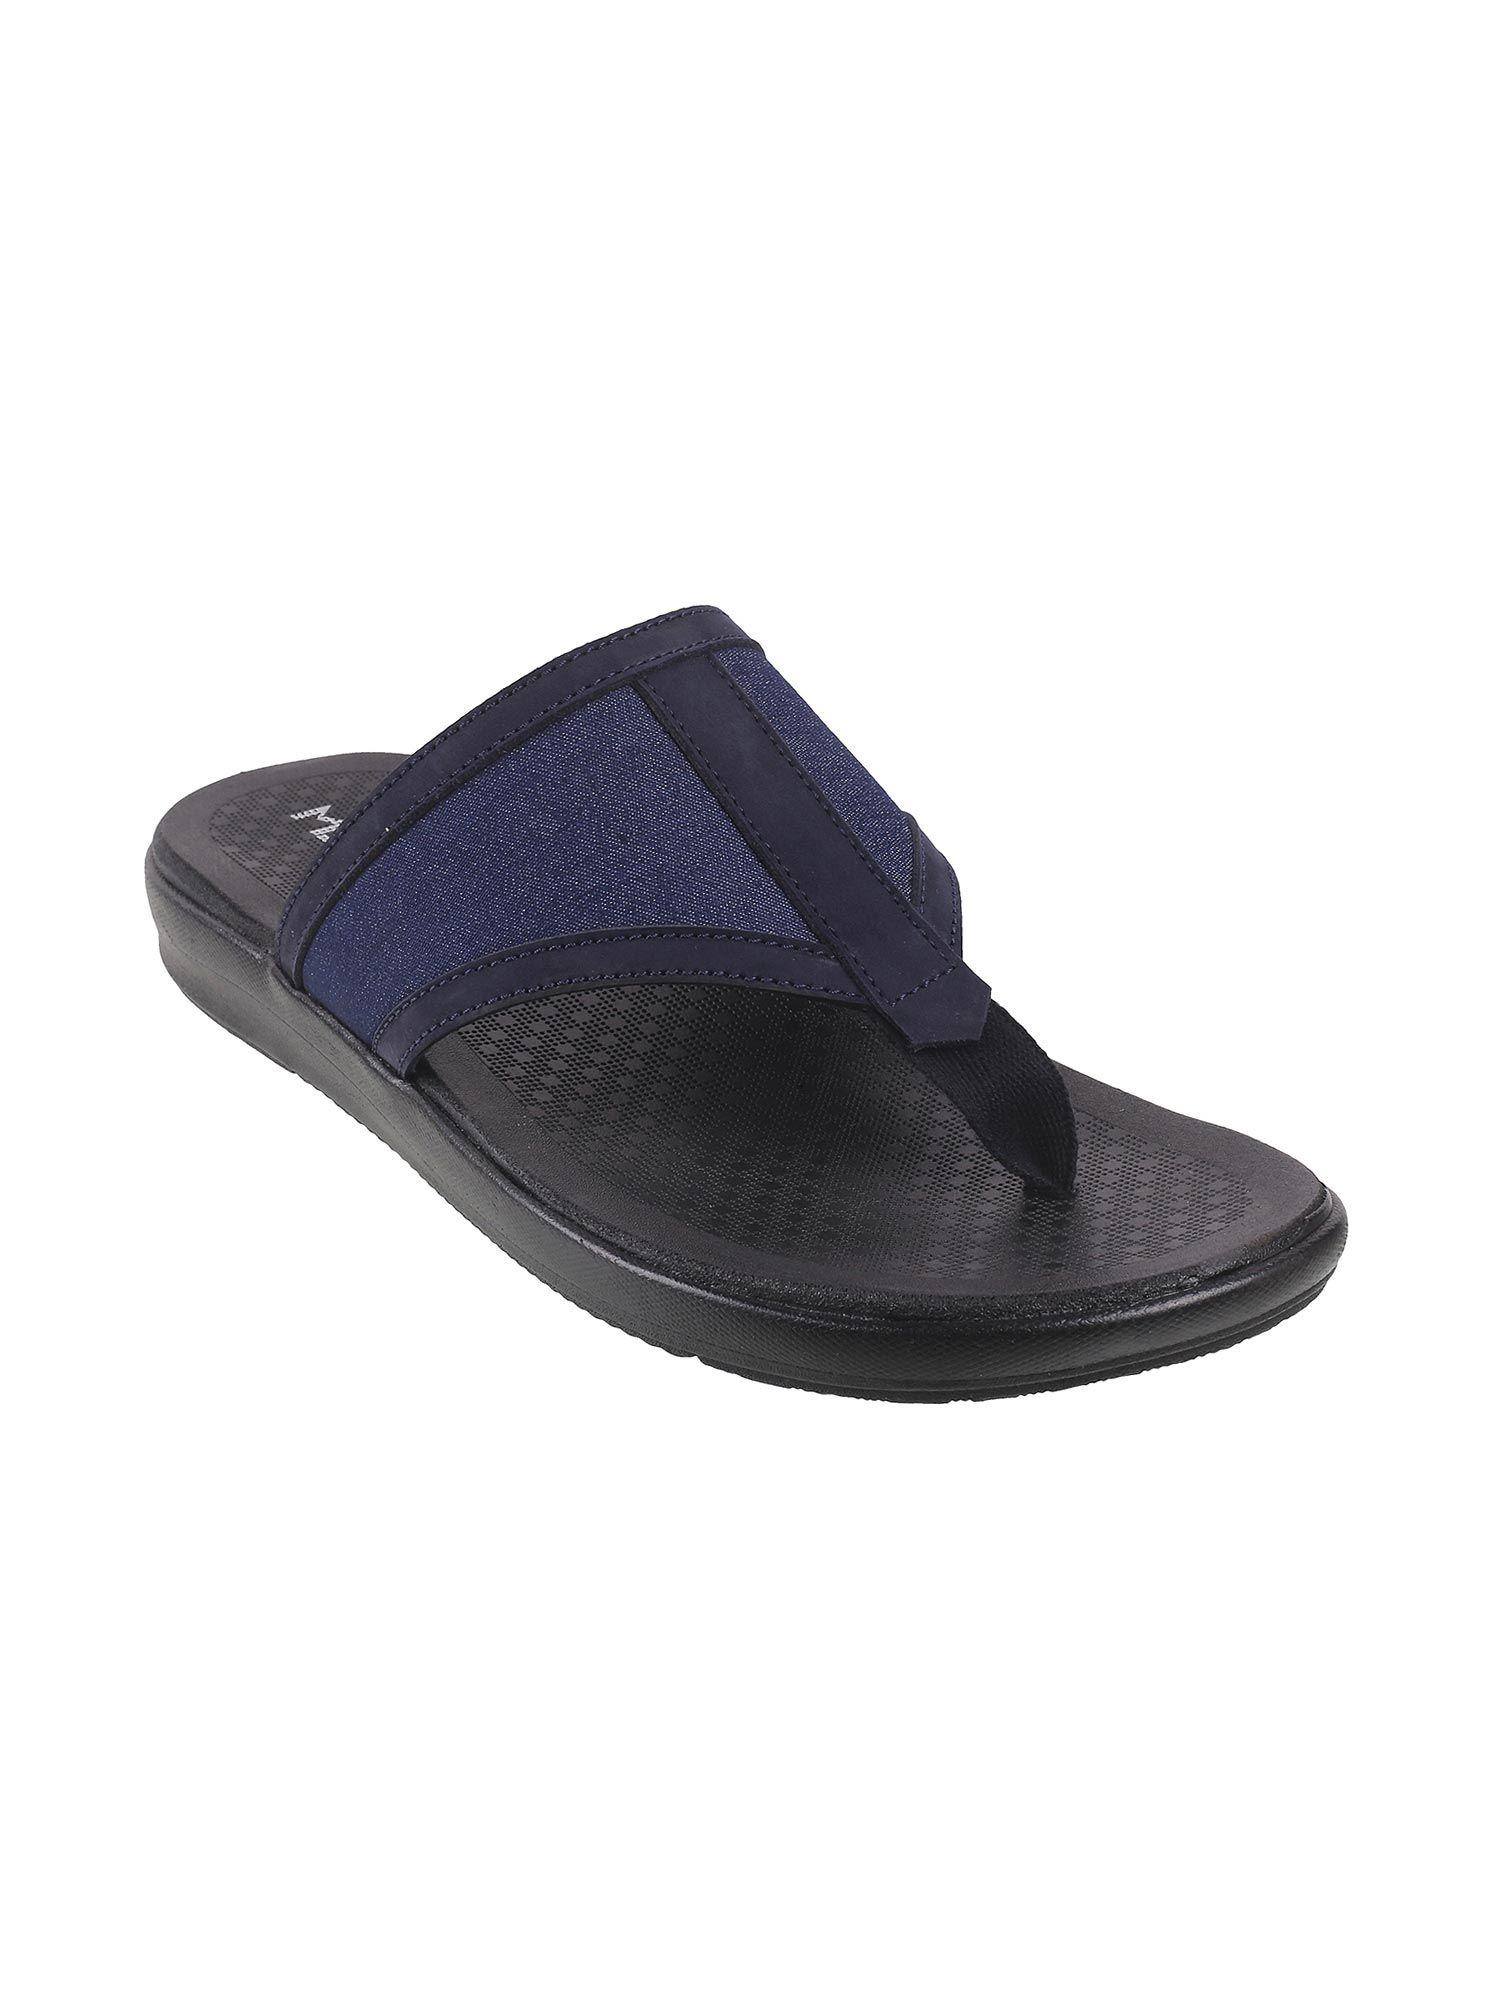 mens-blue-sandals